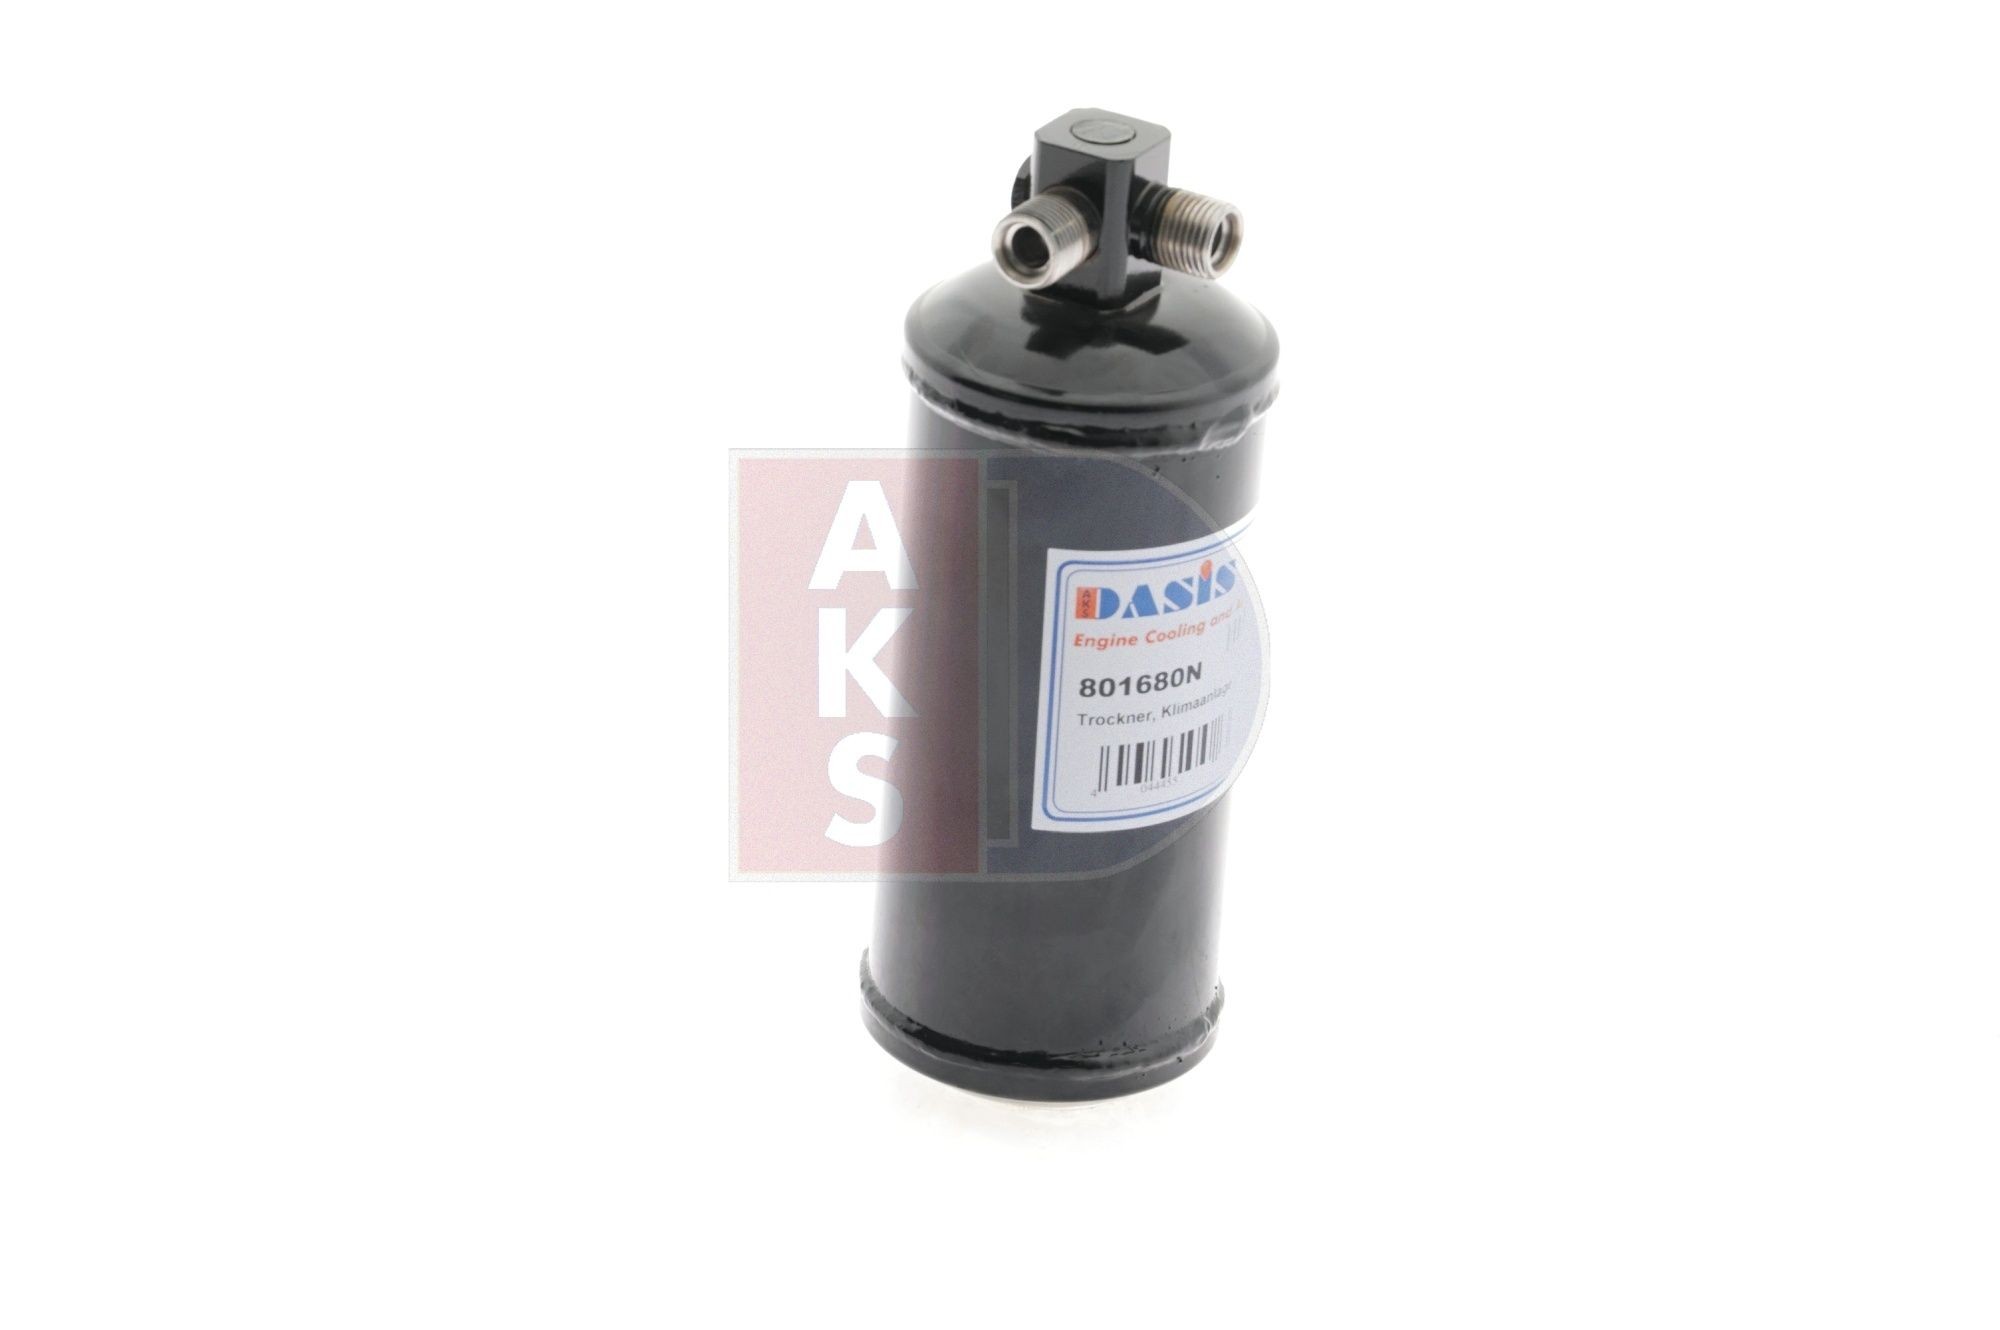 AKS DASIS 900060N Engine leak detection dye